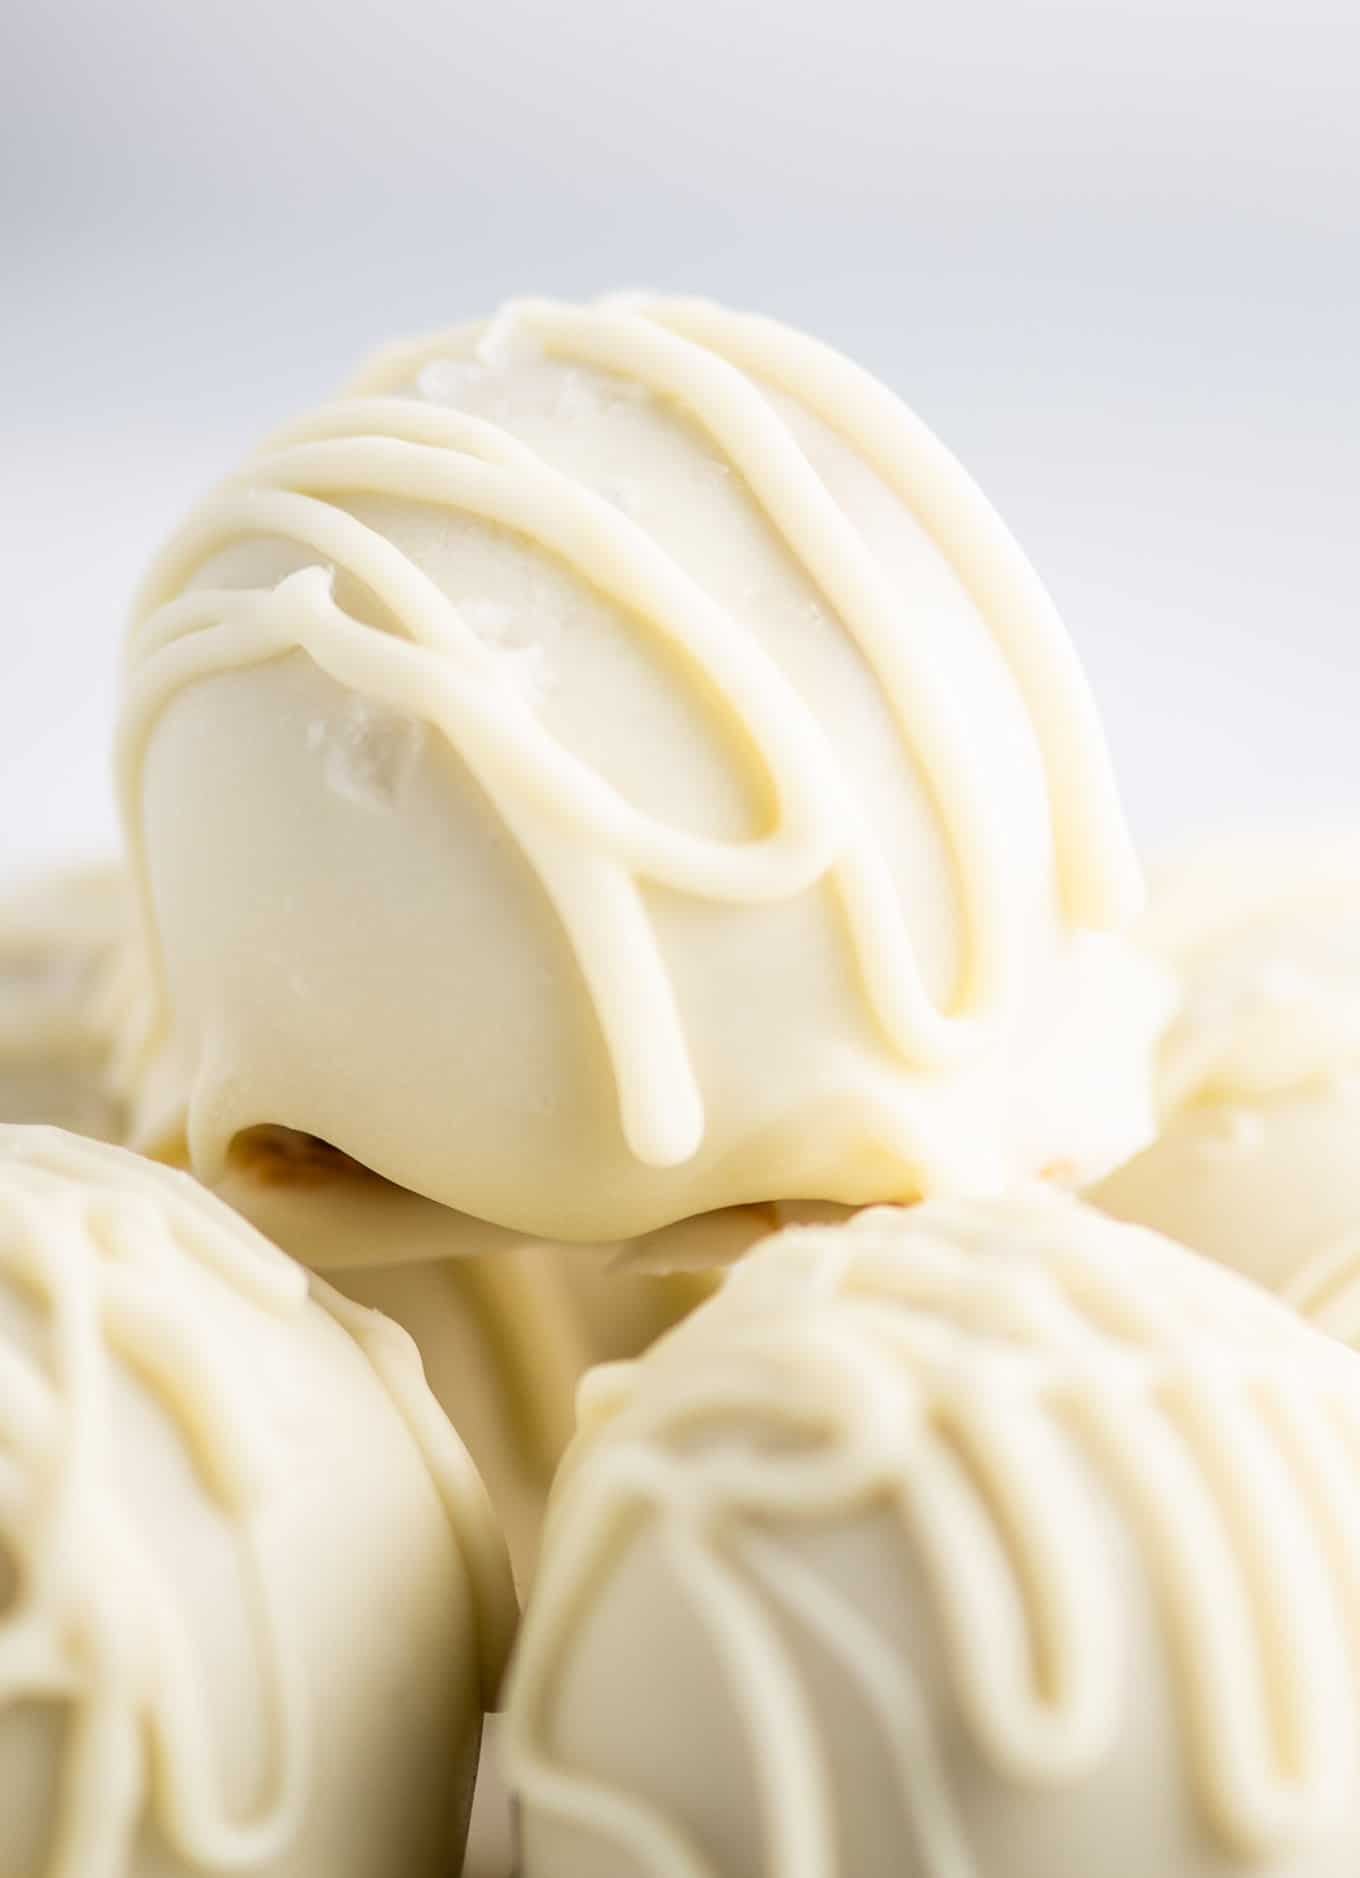 white chocolate truffles close up image